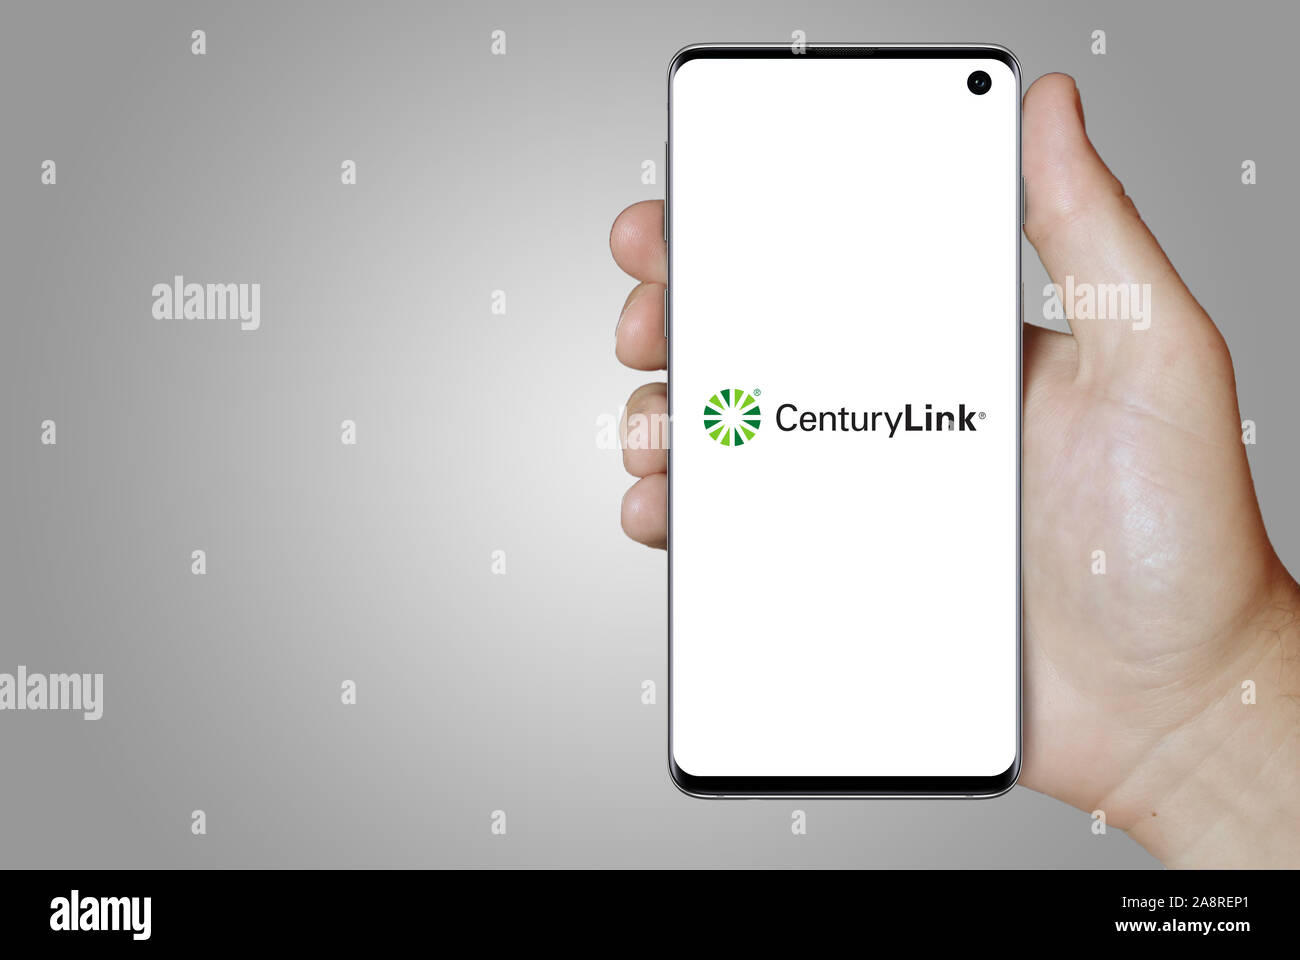 Logo of public company CenturyLink Inc displayed on a smartphone. Grey background. Credit: PIXDUCE Stock Photo